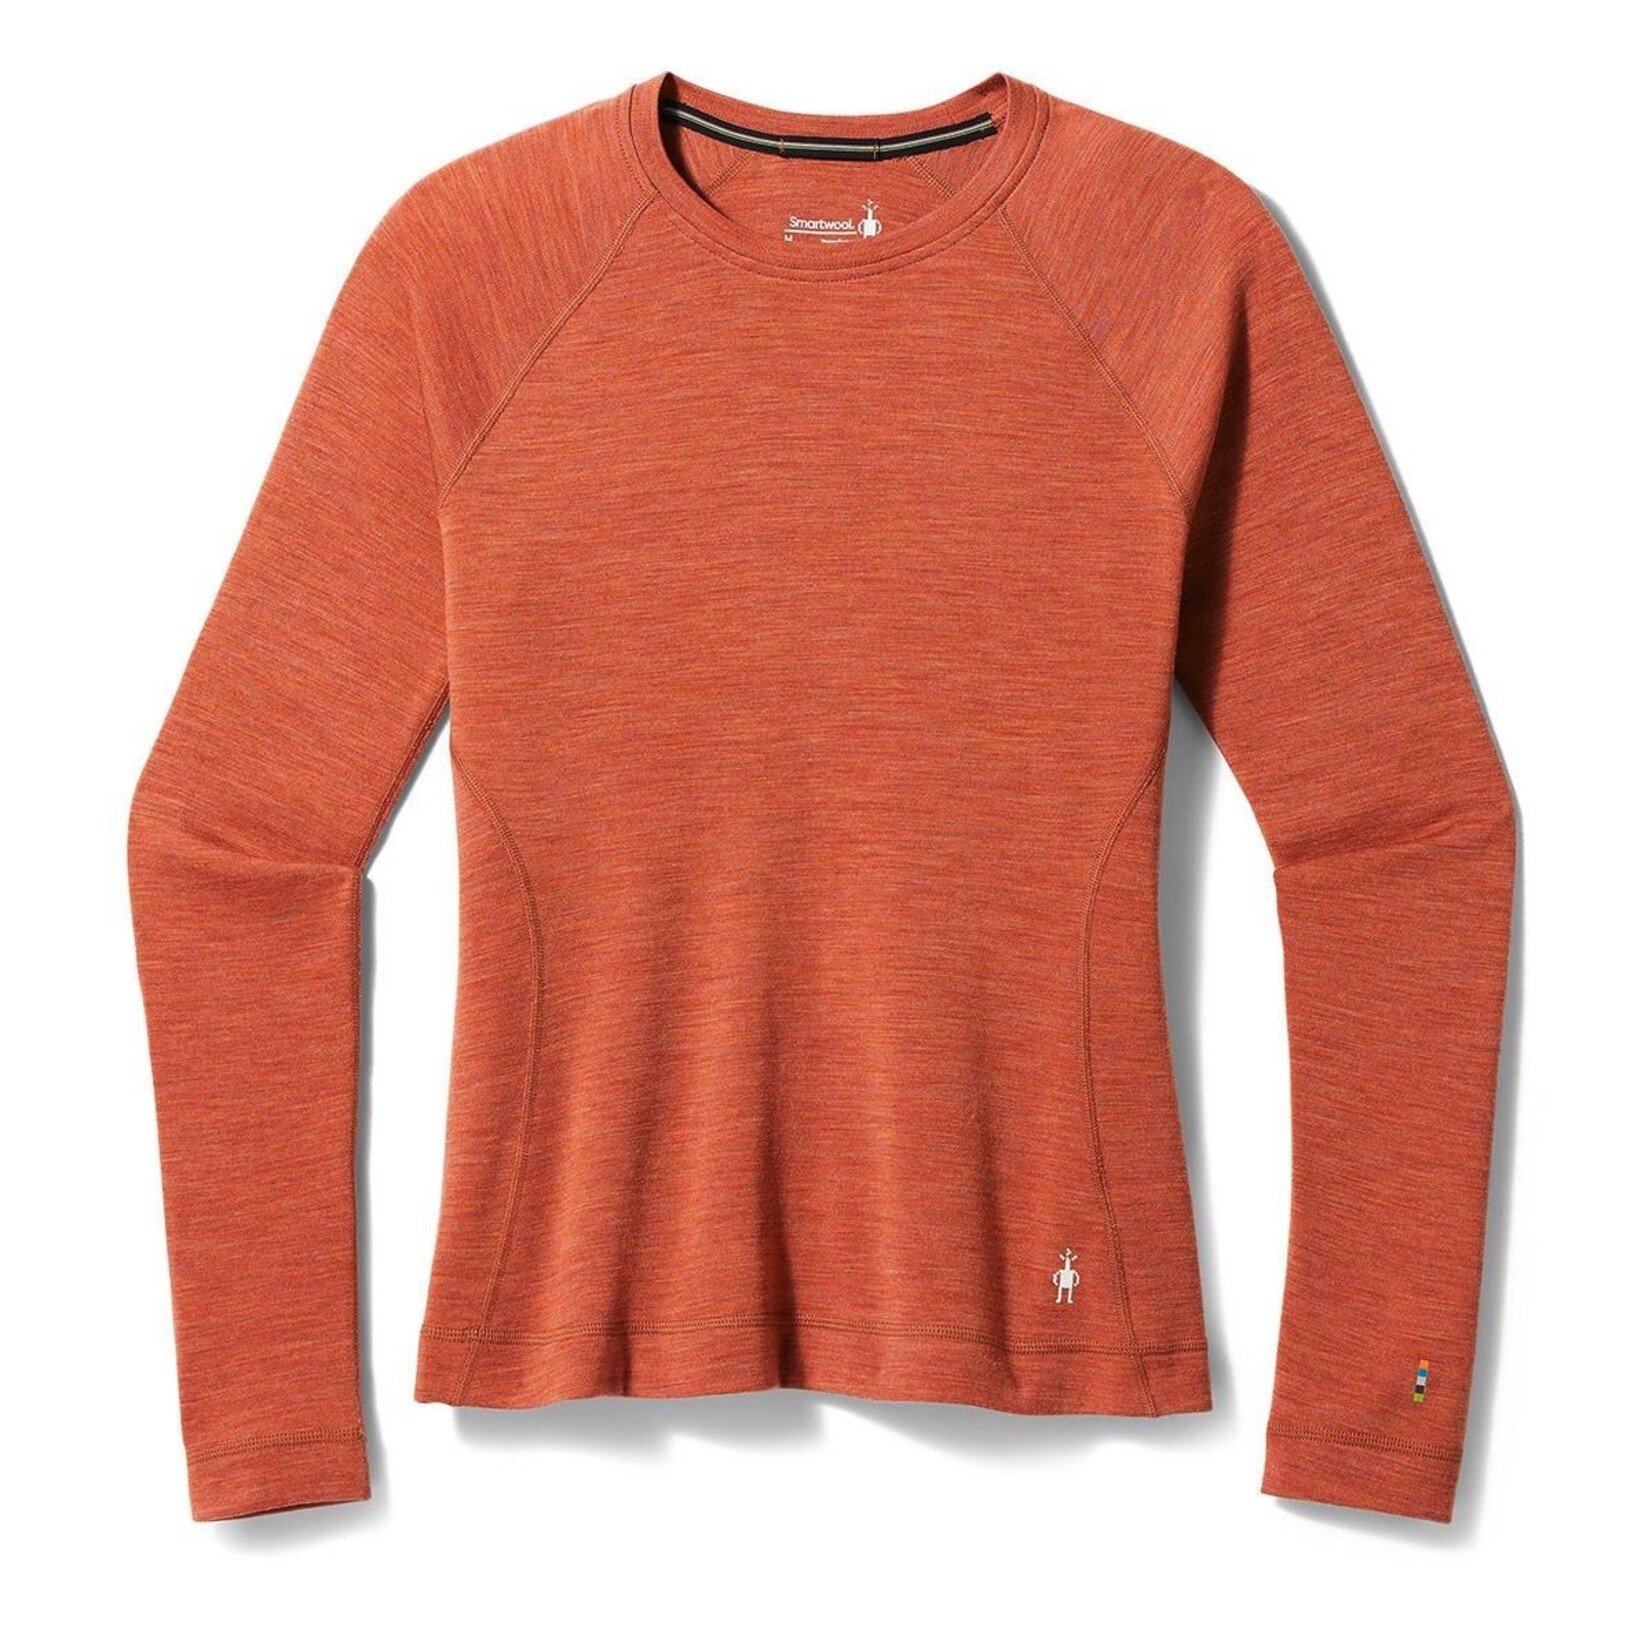 Smartwool 100% Merino Wool Long Sleeve Baselayer Top Mens Size Medium Red